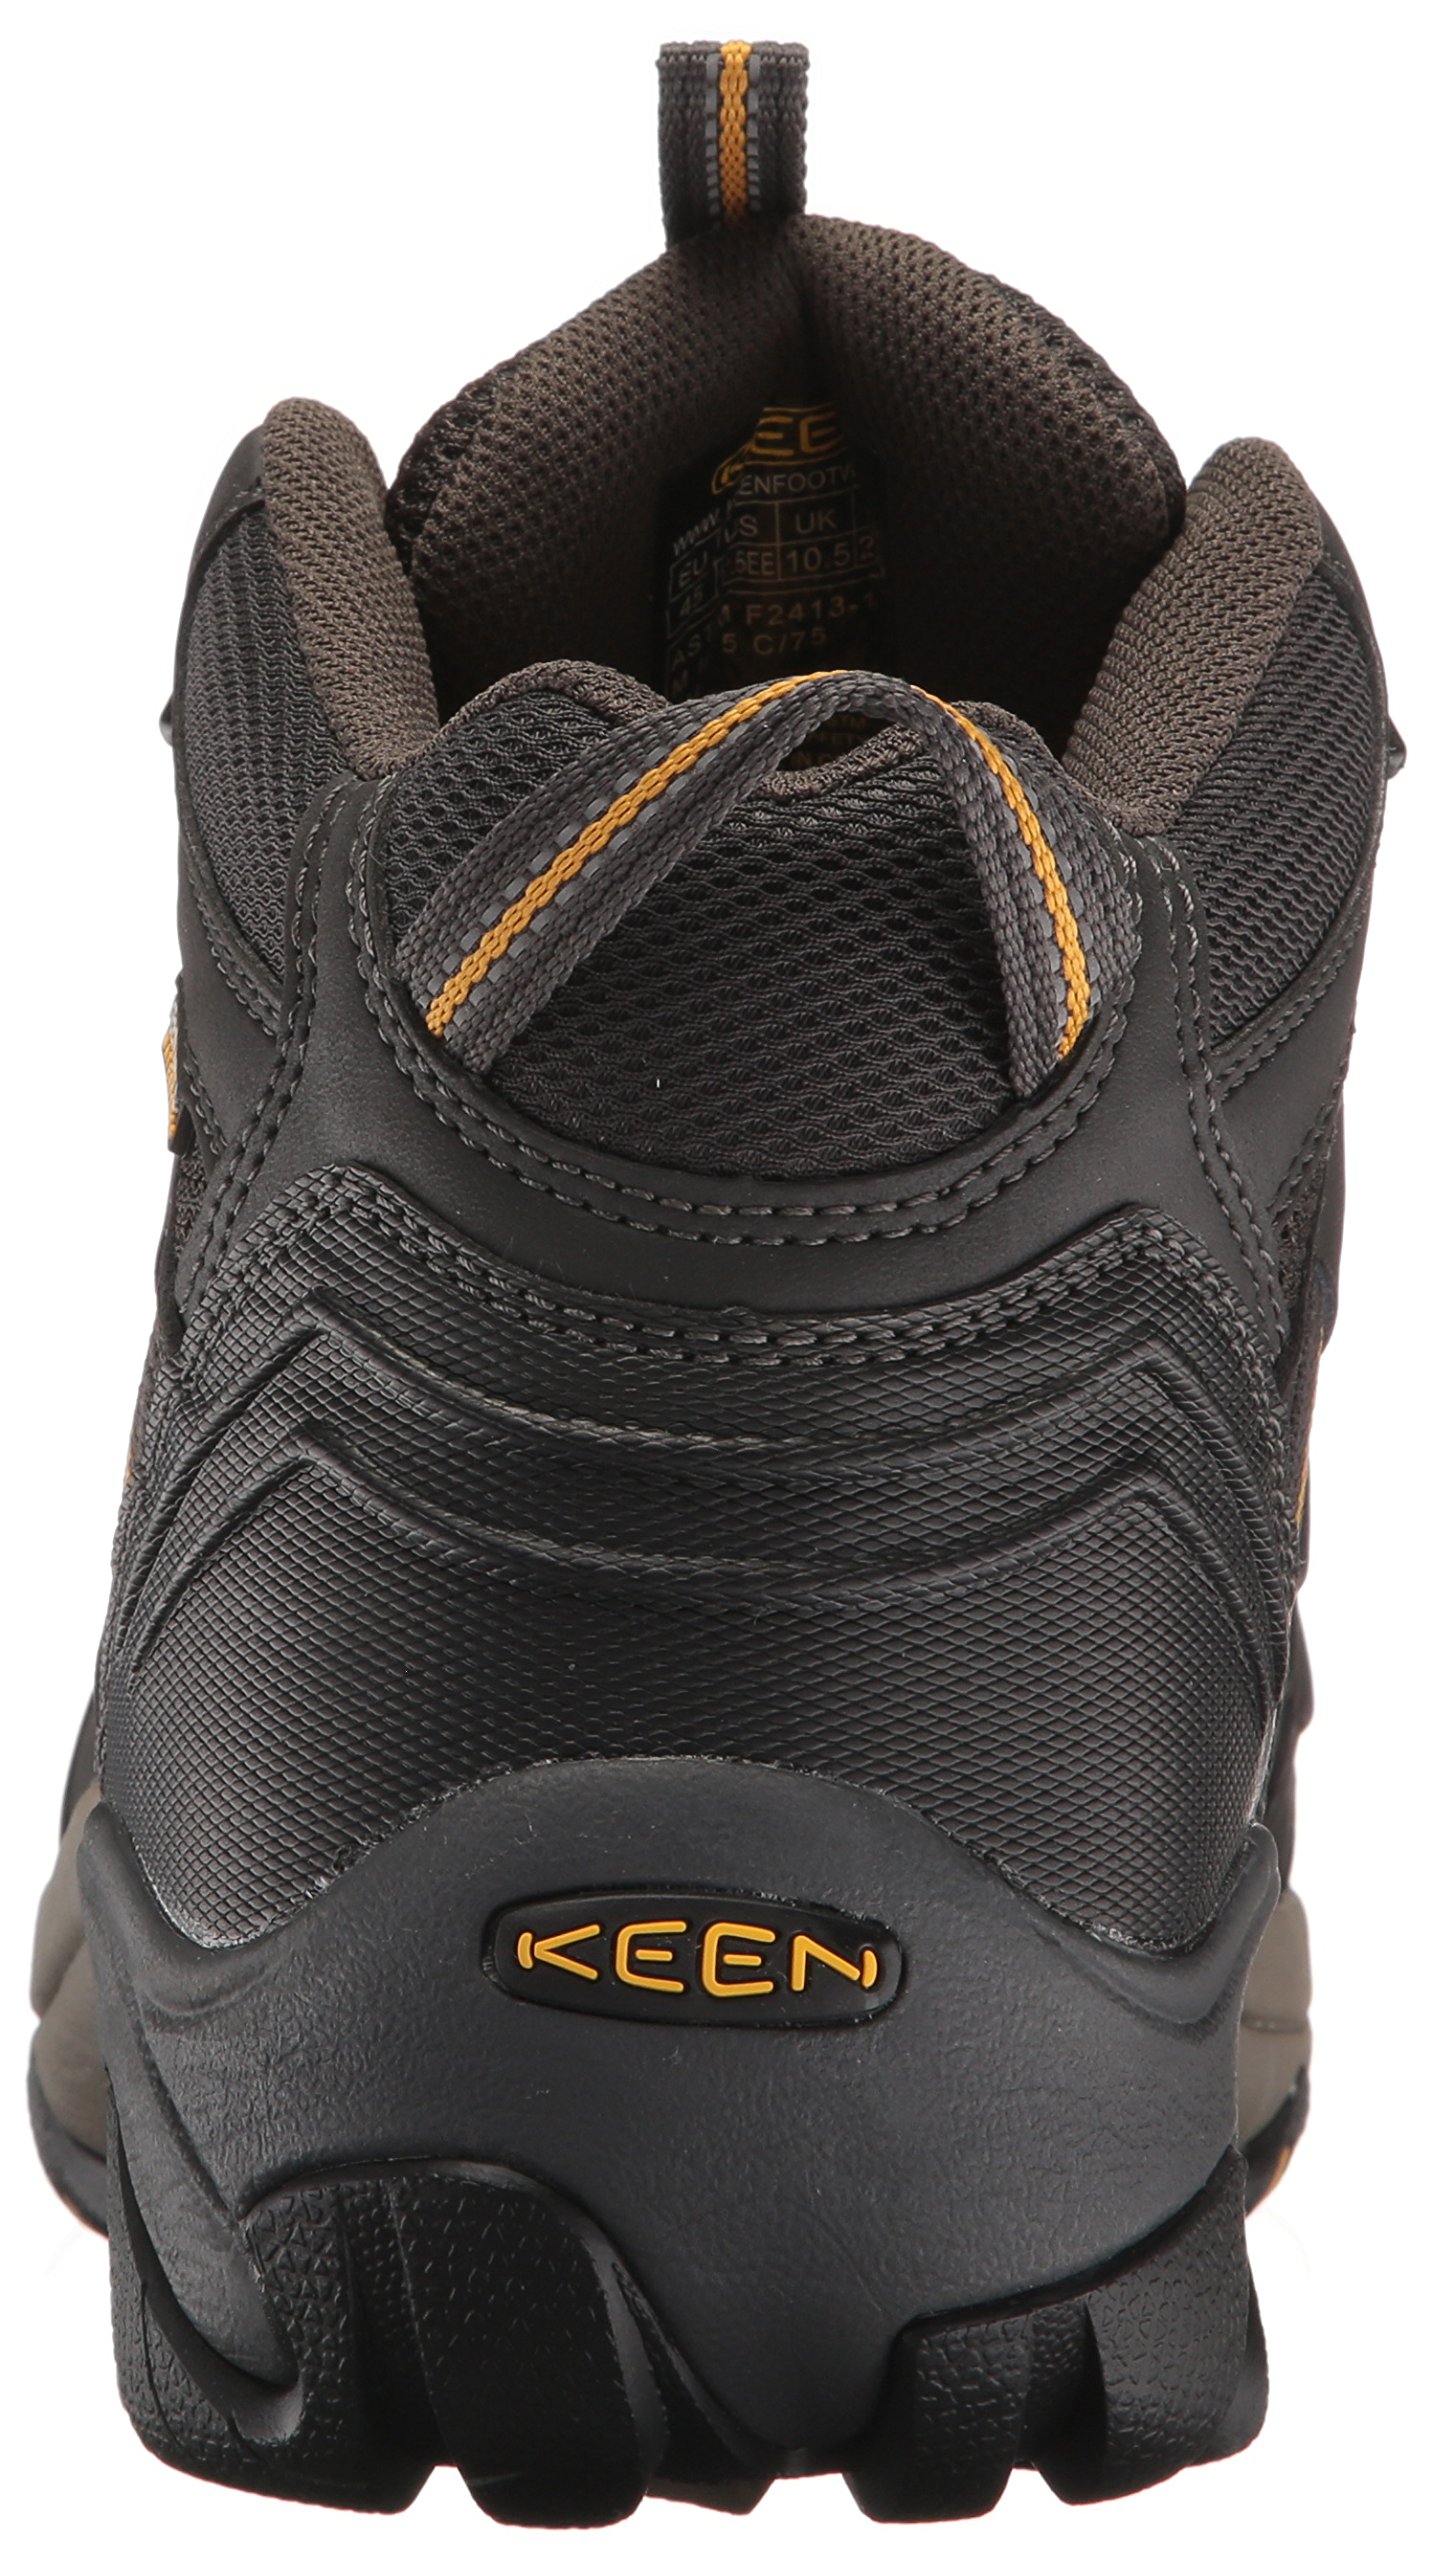 KEEN Utility Men's Lansing Mid Height Steel Toe Waterproof Work Boot, Raven/Tawny Olive, 10.5